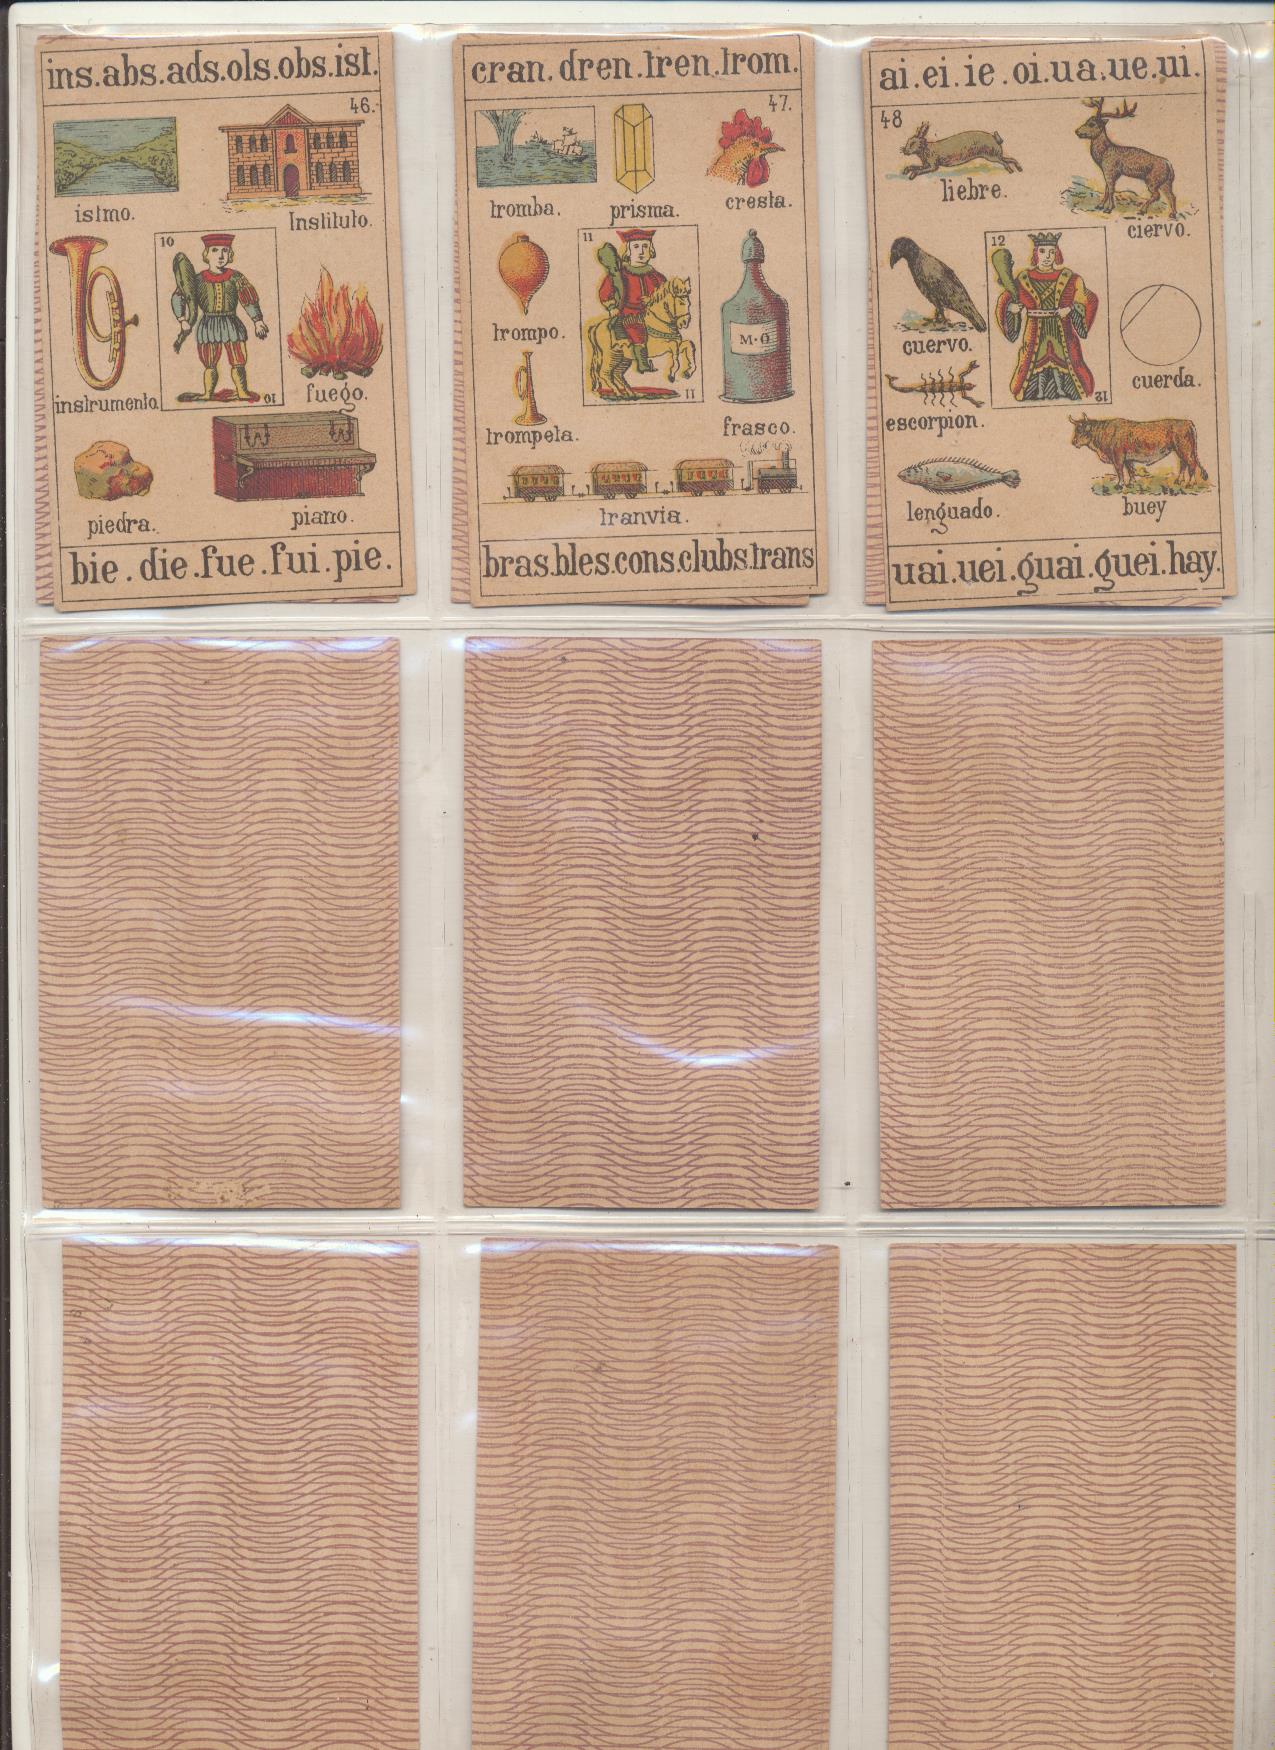 Baraja Recreo Infantil. 48 cartas. Completa. Naipes Instructivos. Palamós Gerona, Siglo XIX. MUY ESCASA ASÍ